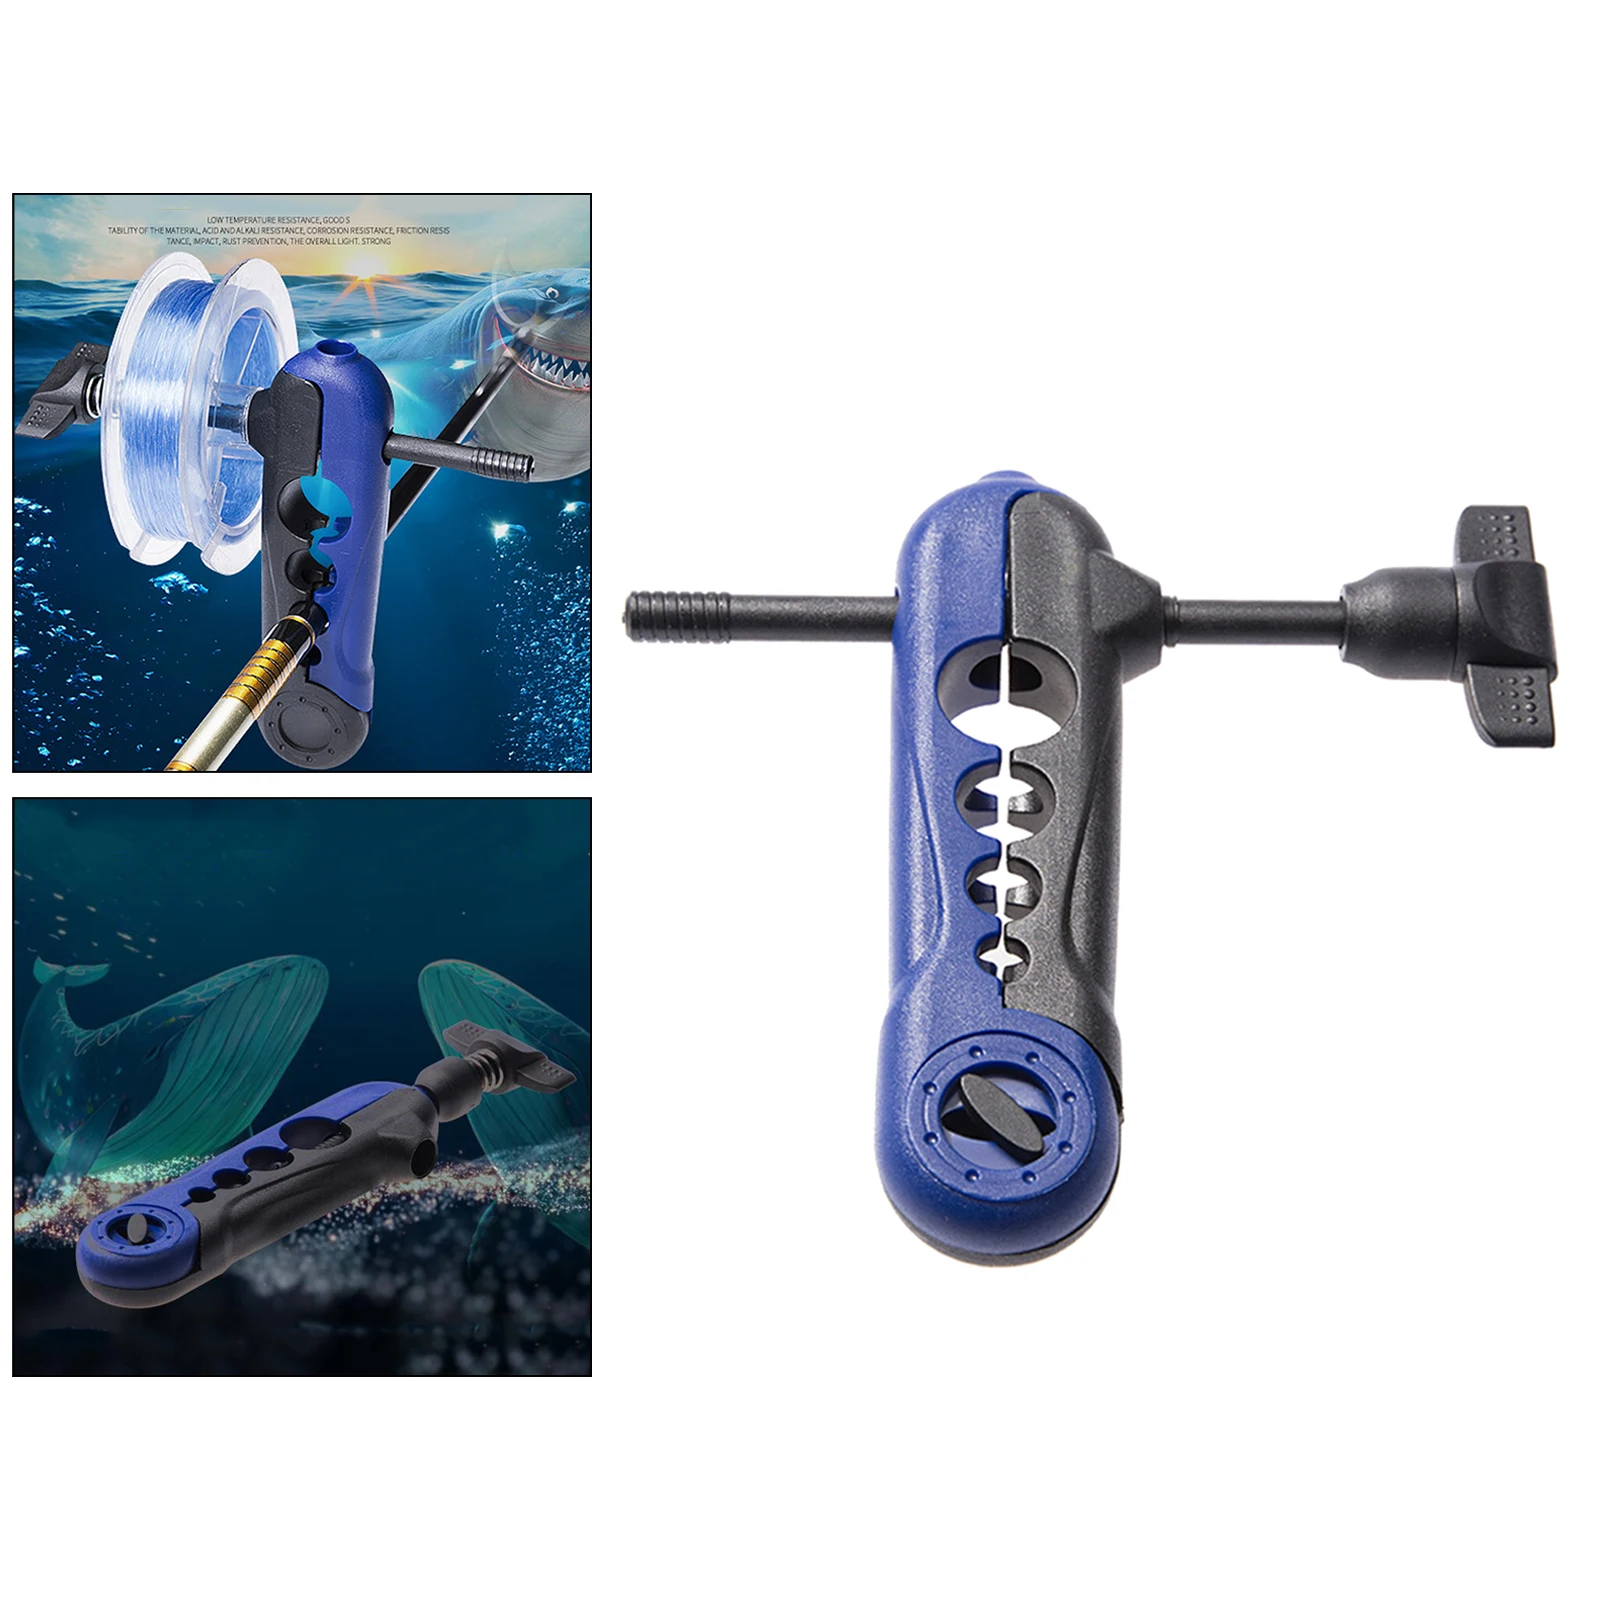 Portable Universal Multifunctional Adjustable Outdoor Mini Fishing Reel Spooler Line Winder Tool Fishing Winder Board Accessory